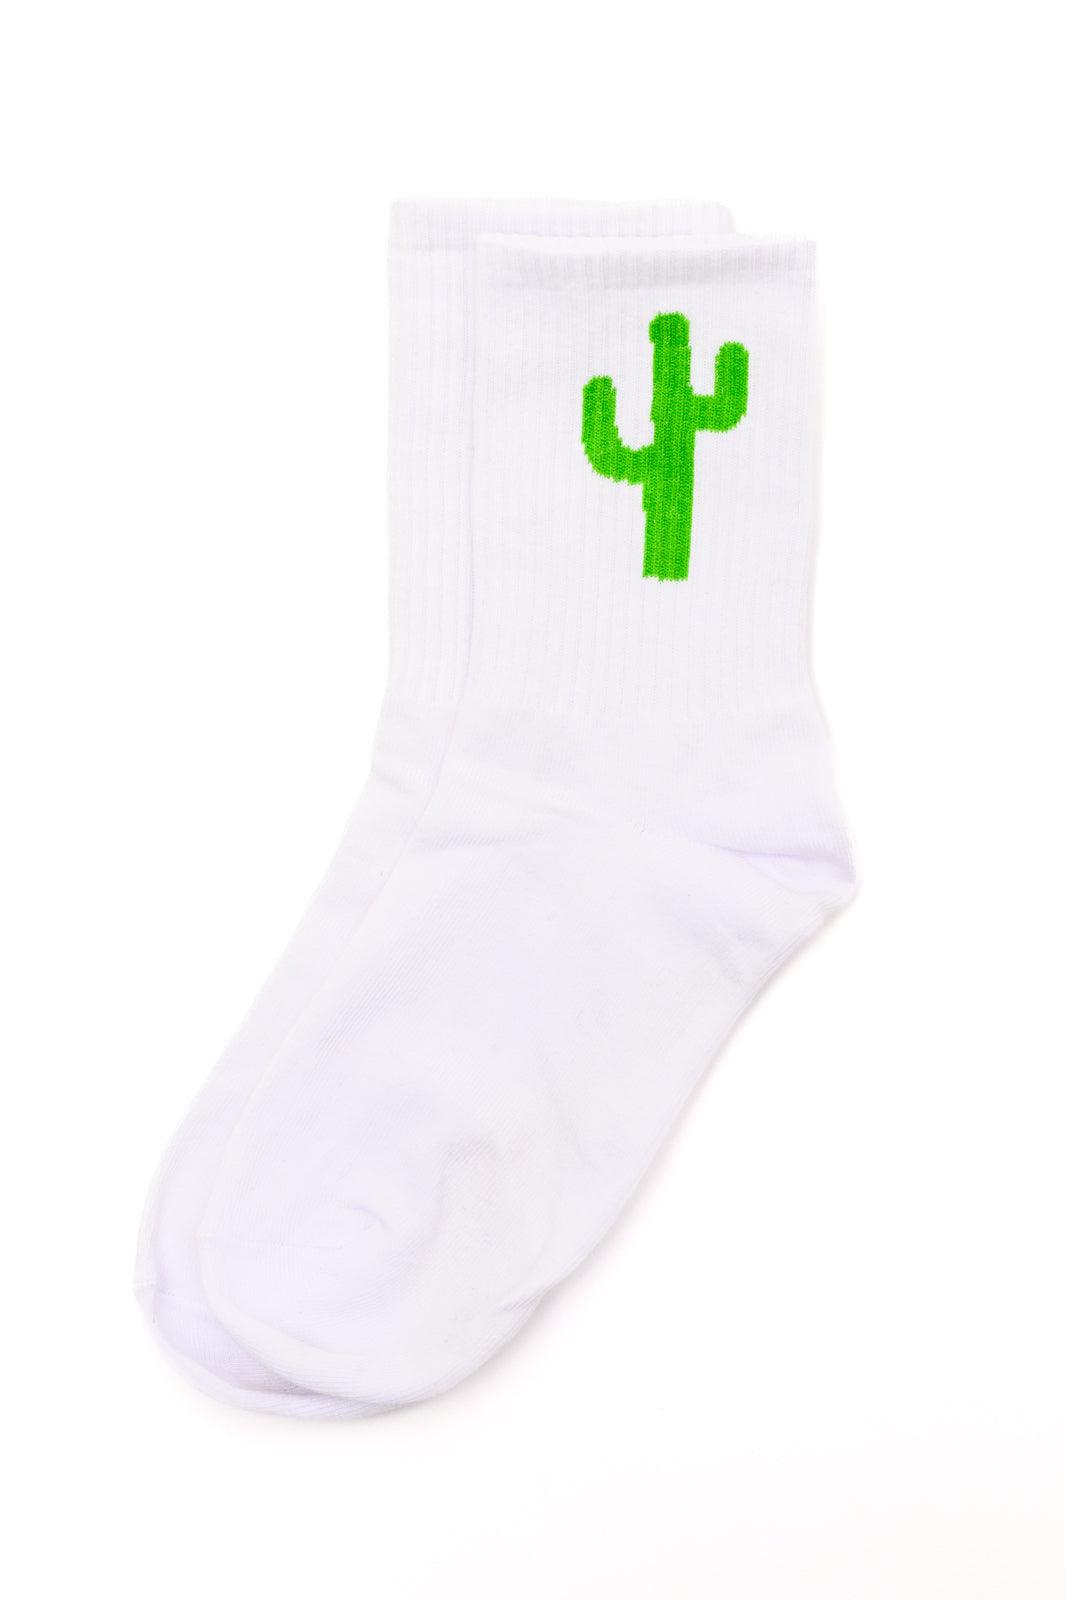 Sweet Socks Cactus - Black Powder Boutique